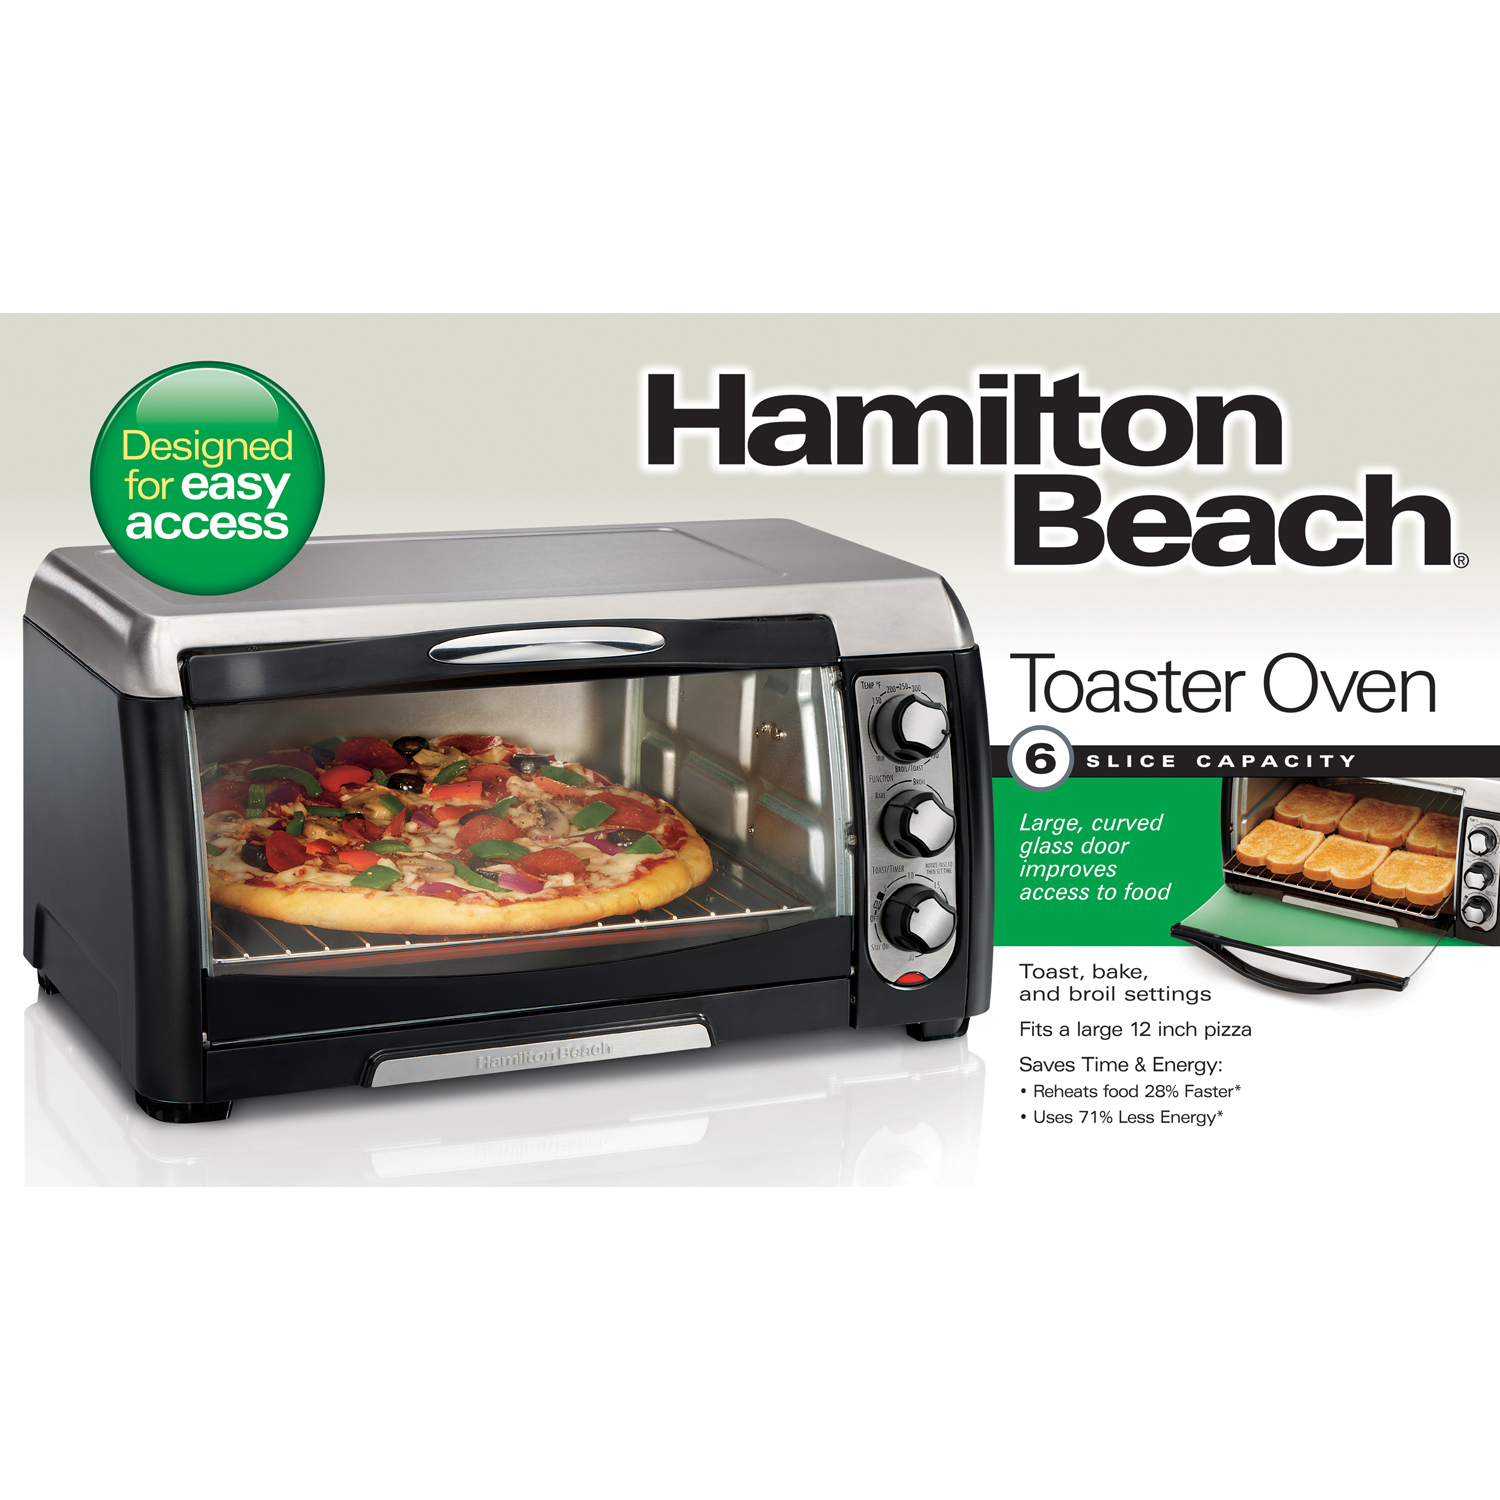 Hamilton Beach Oven Red 31335d : Target